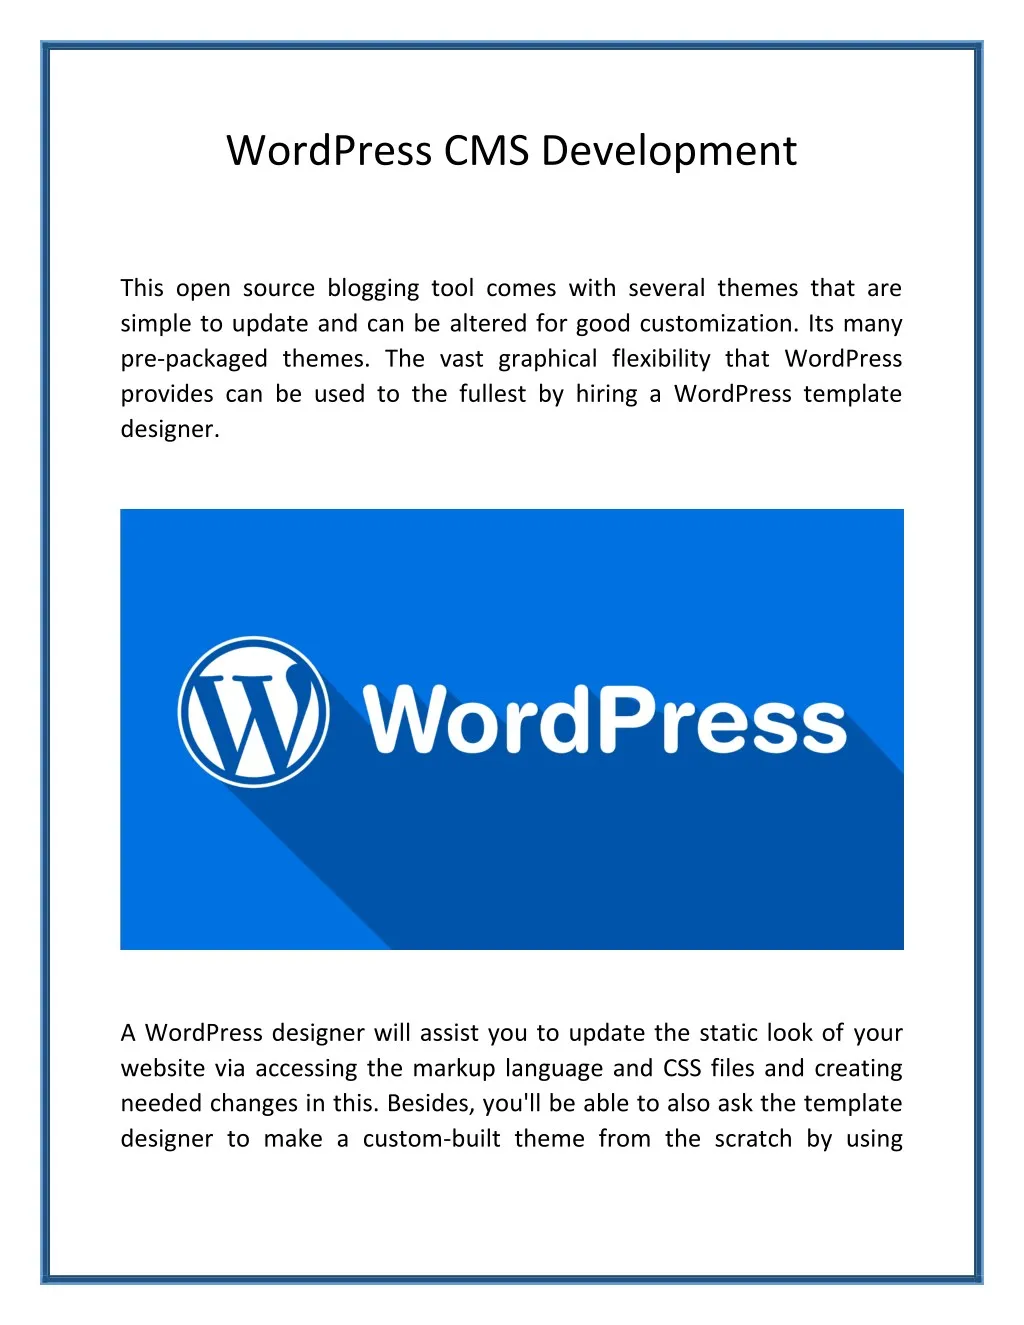 wordpress cms development